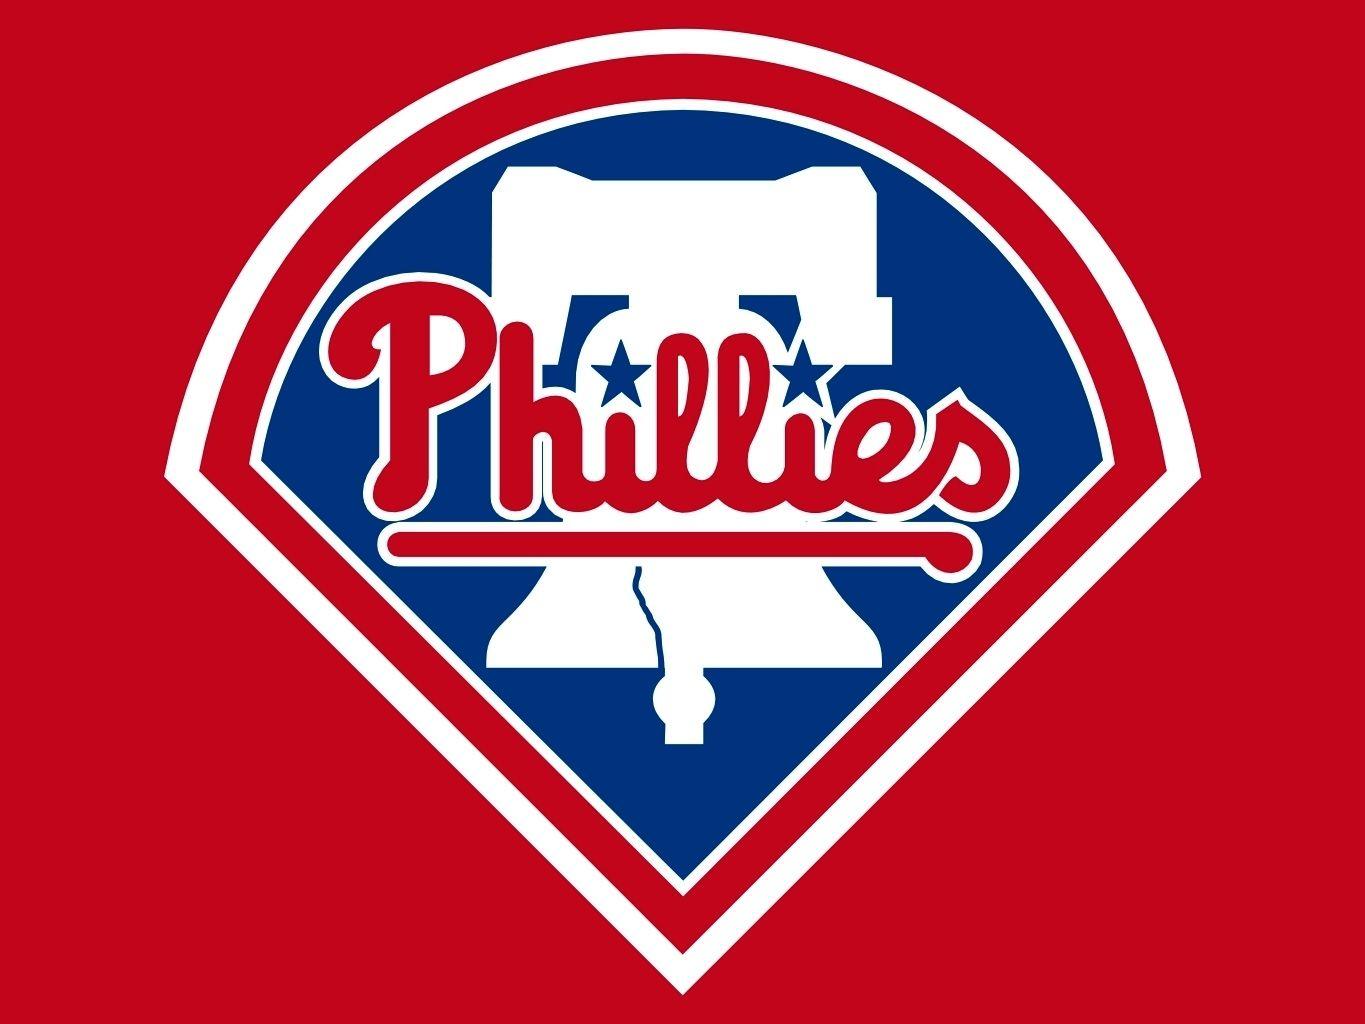 Old Phillies Logo - Philadelphia Phillies | Major League Sports Wiki | FANDOM powered by ...